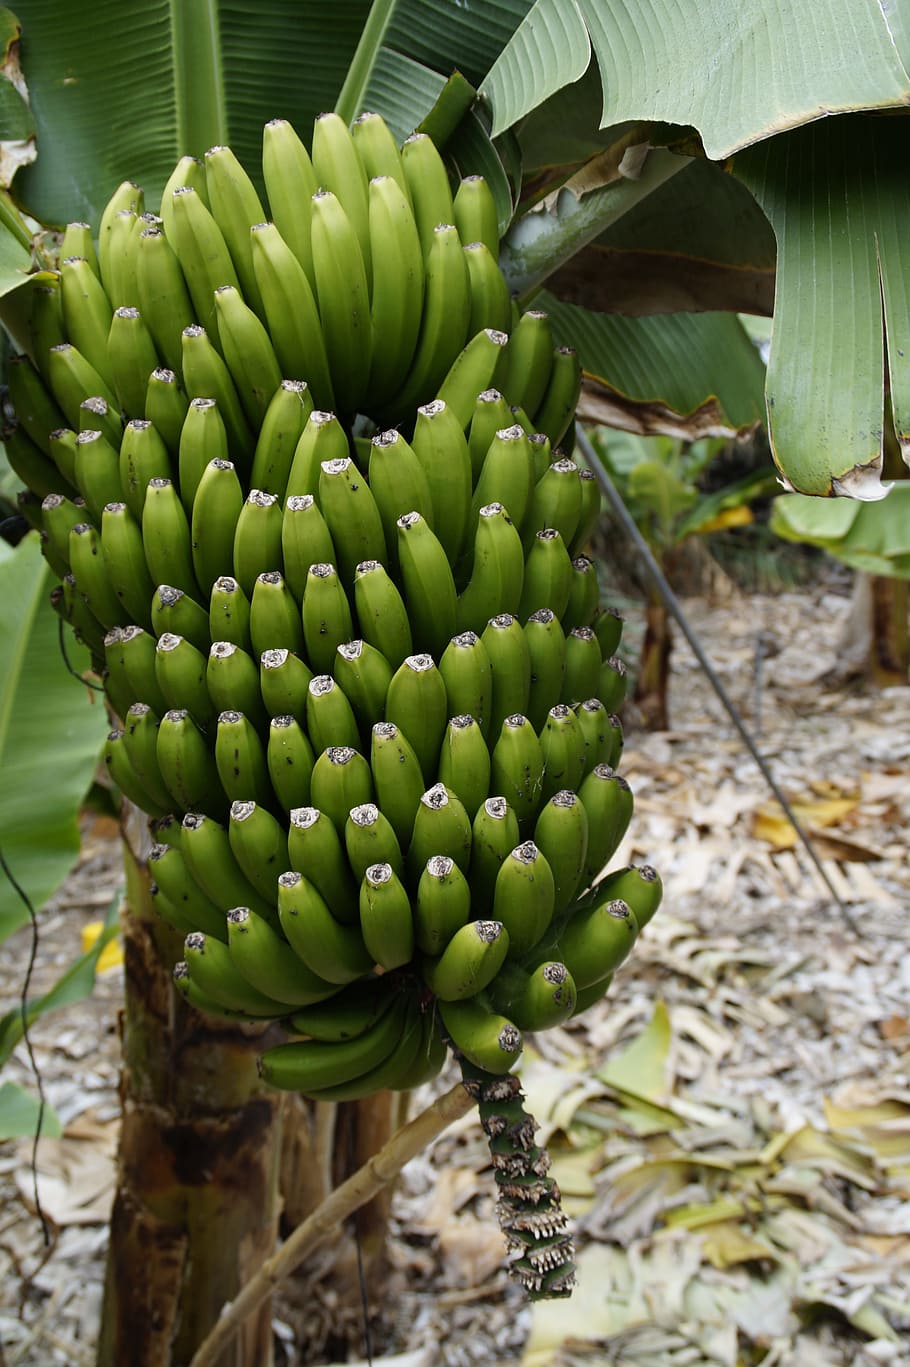 banana cultivation, Banana Plantation, Cultivation, banana, banana plant, fruits, blossom, bloom, immature, fruit